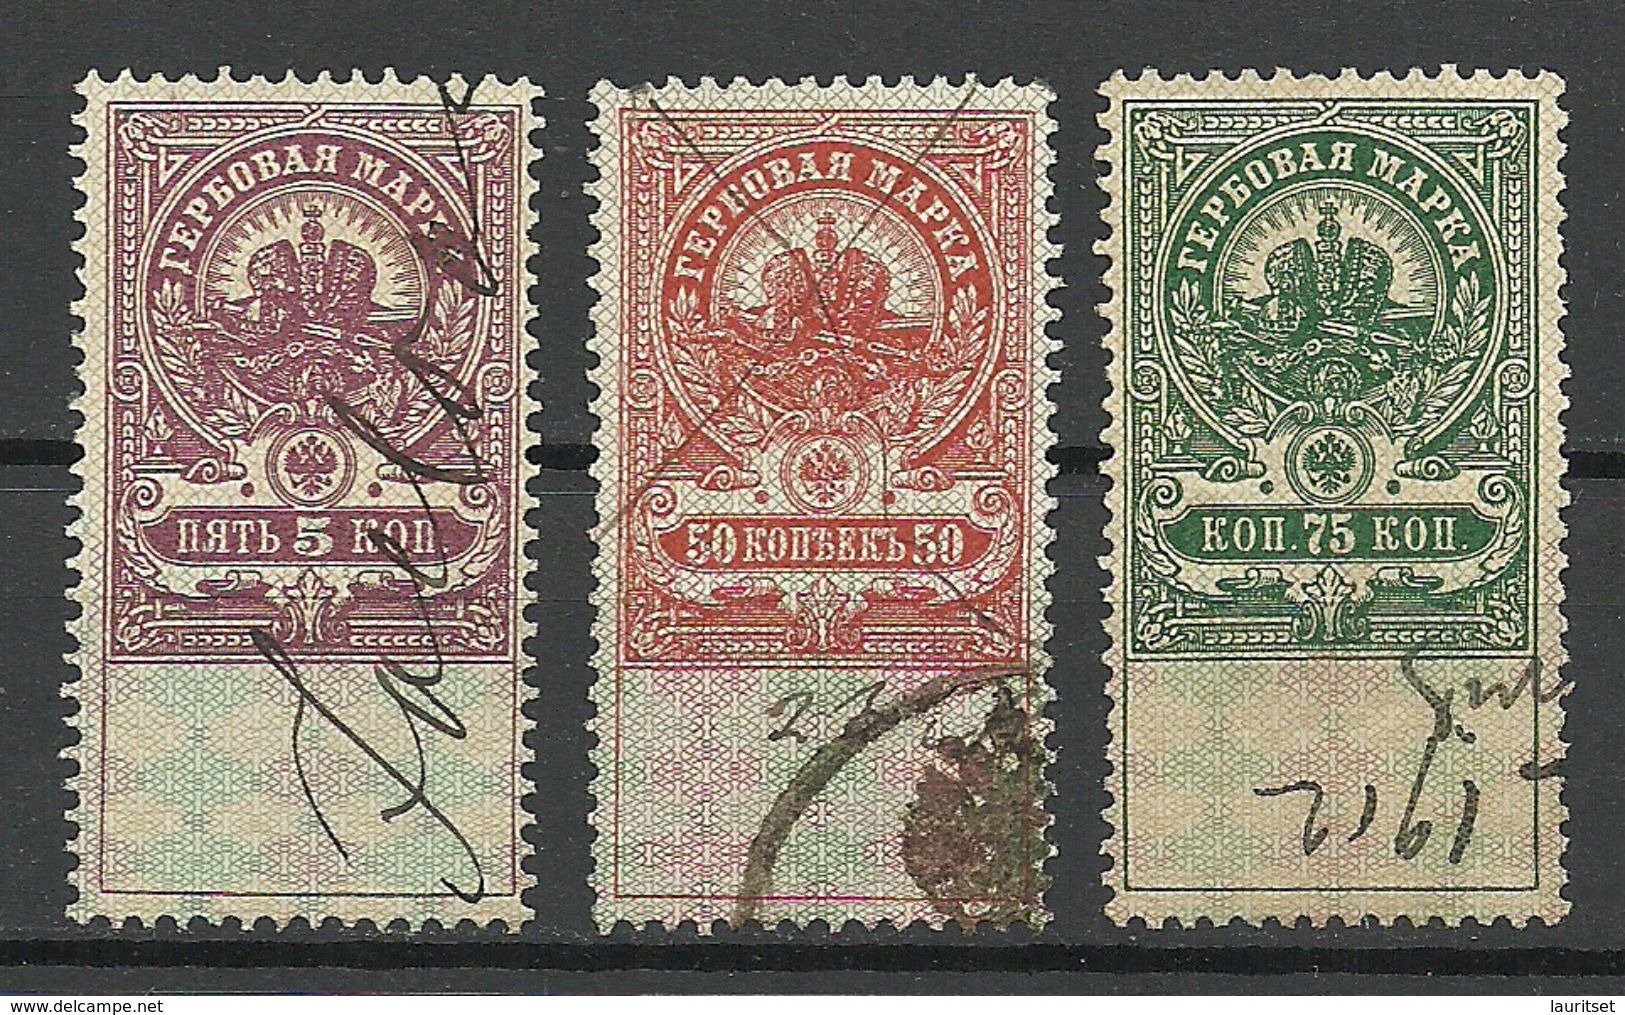 RUSSLAND RUSSIA Russie Ca 1890-1900 Steuermarke Revenue Tax Stamps O - Fiscale Zegels